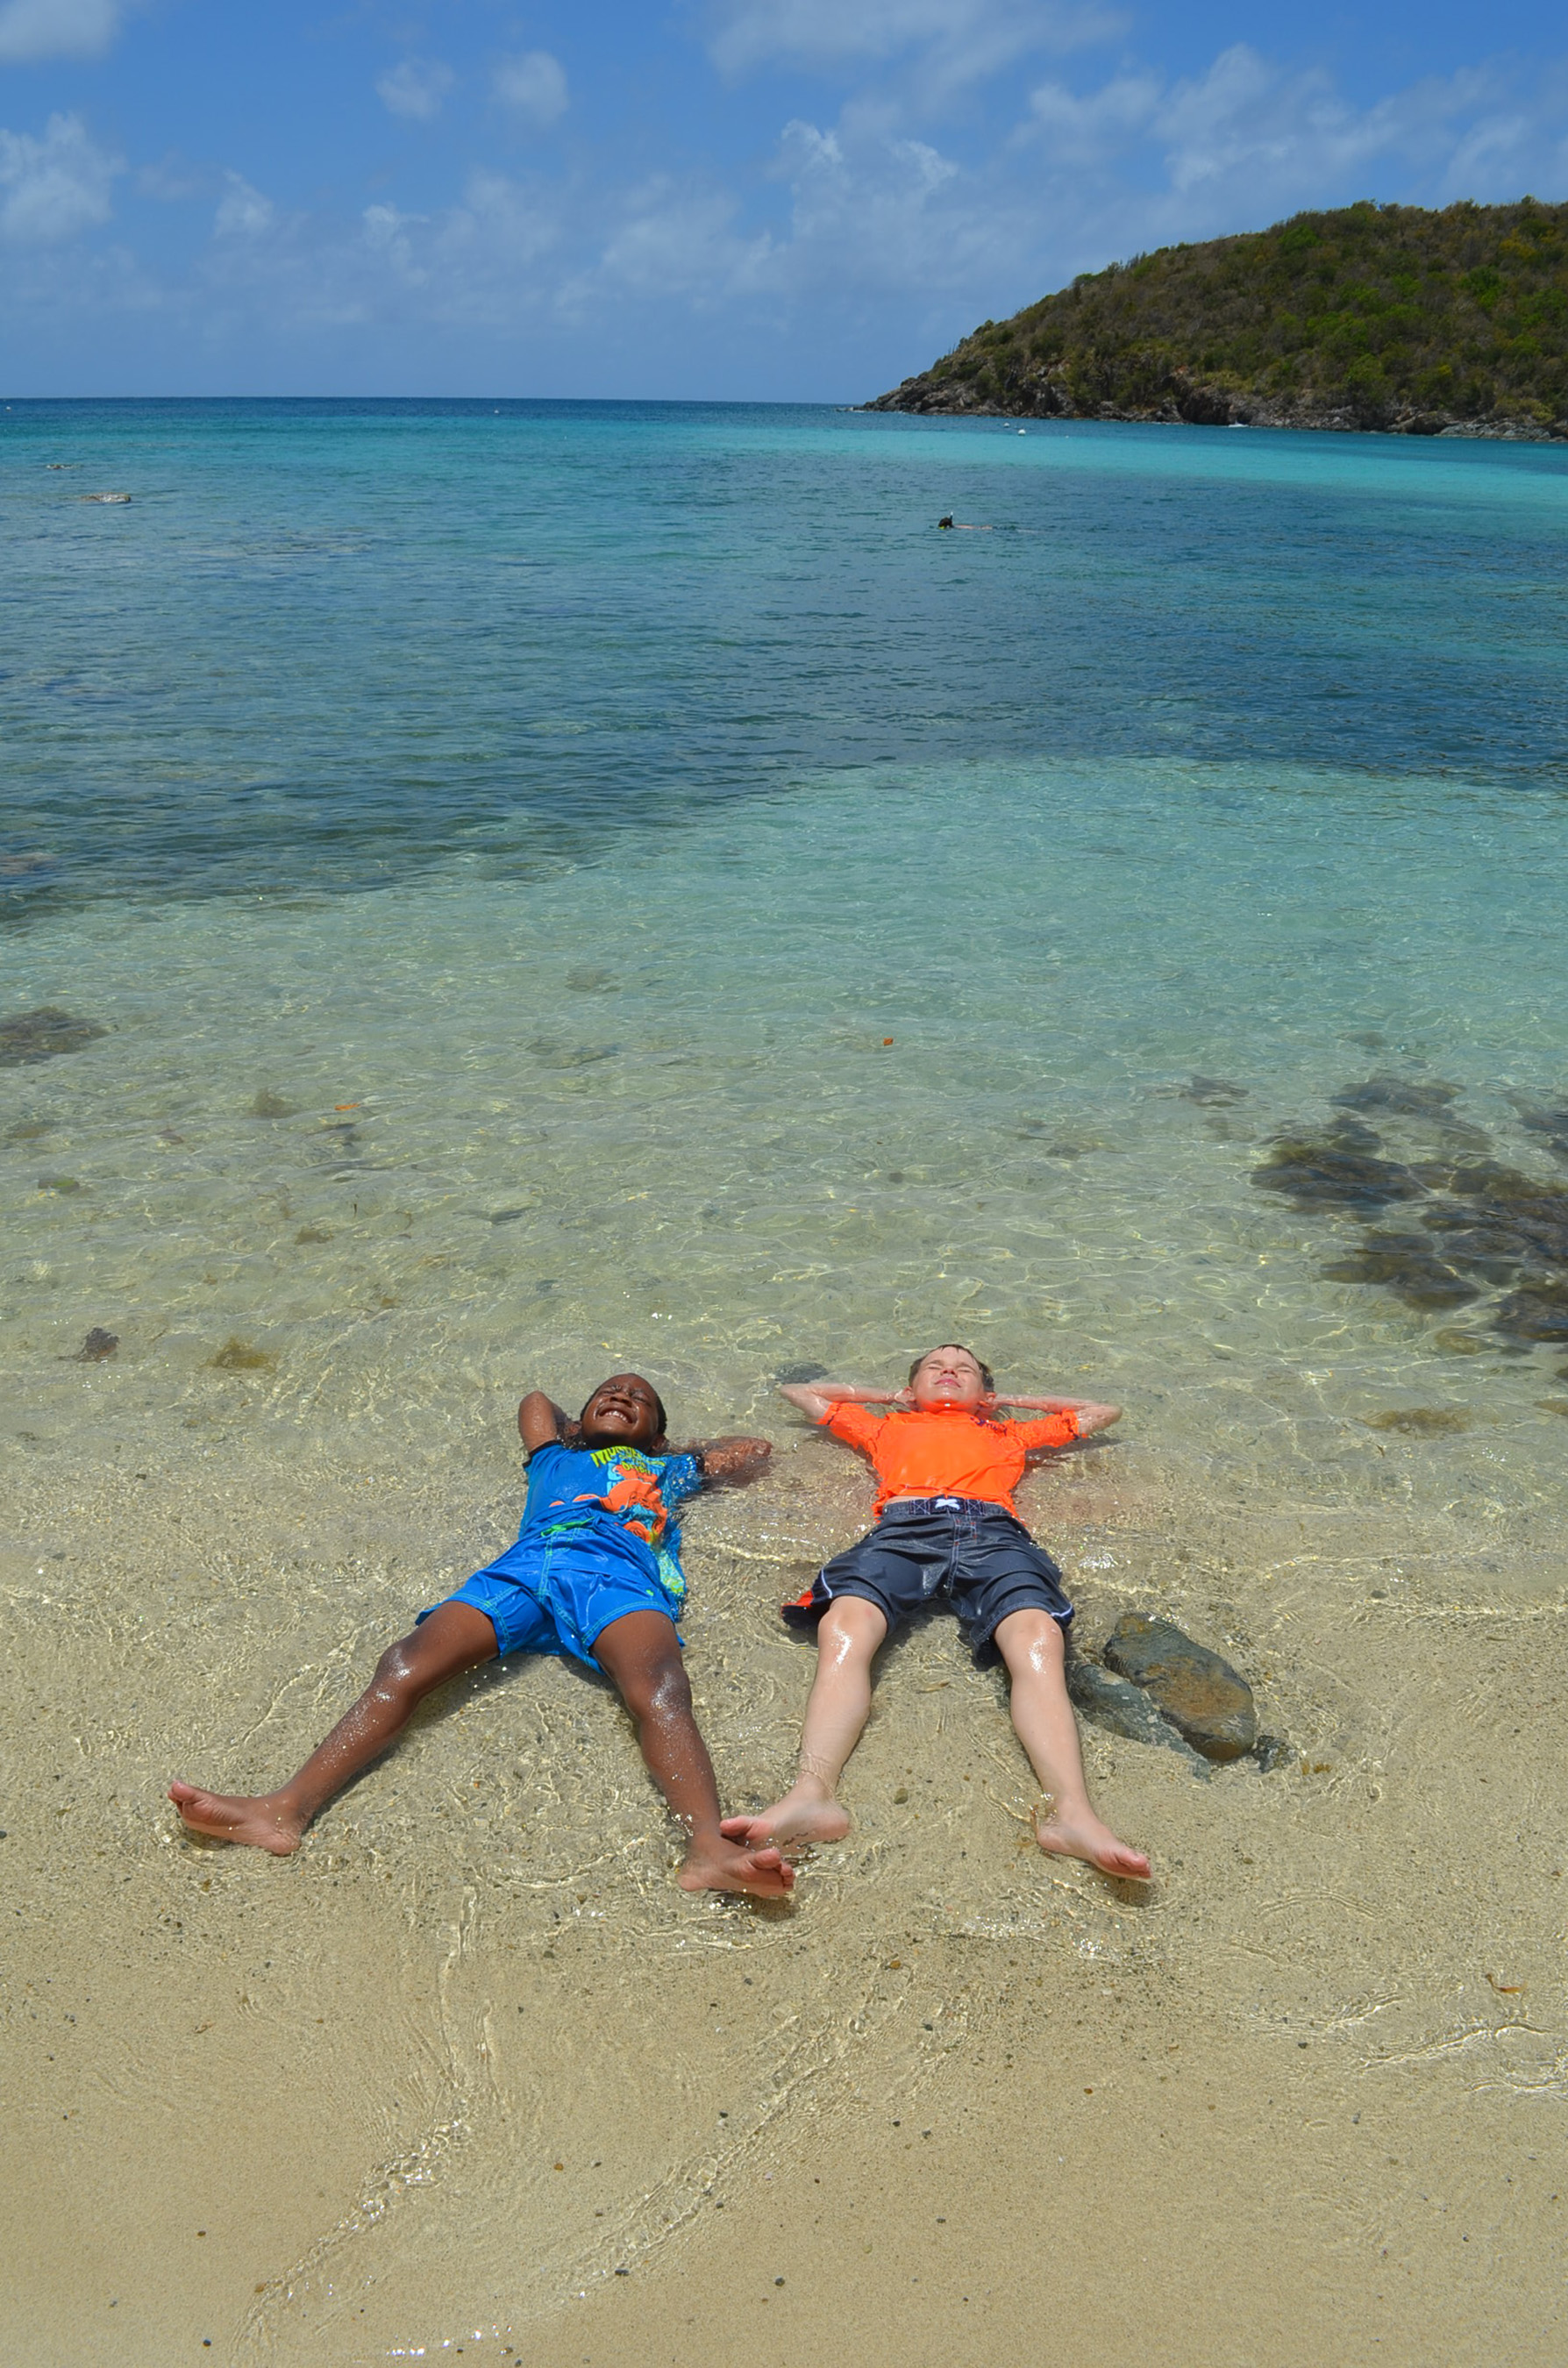 Virgin Islands National Park, Kimberly Hall, Share the Experience 2015 photo contest